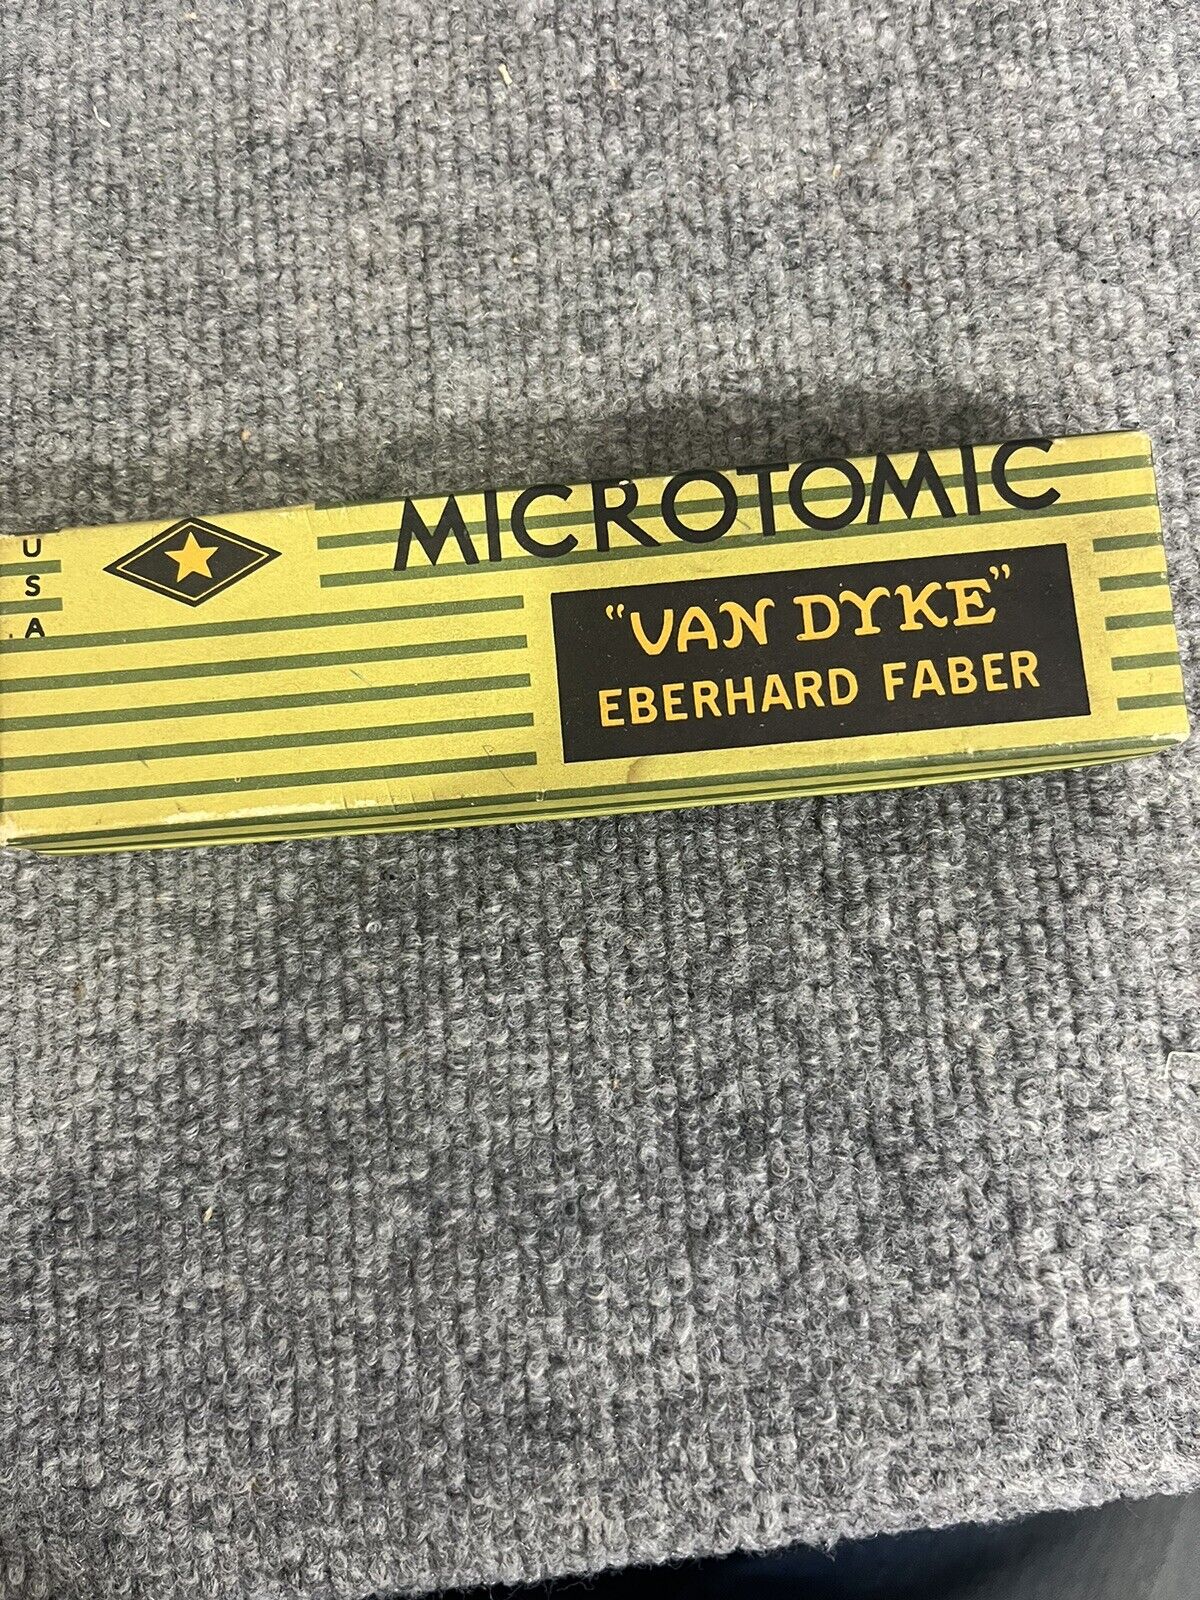 Vintage Microtomic Van Dyke Drawing Pencils With Original Box